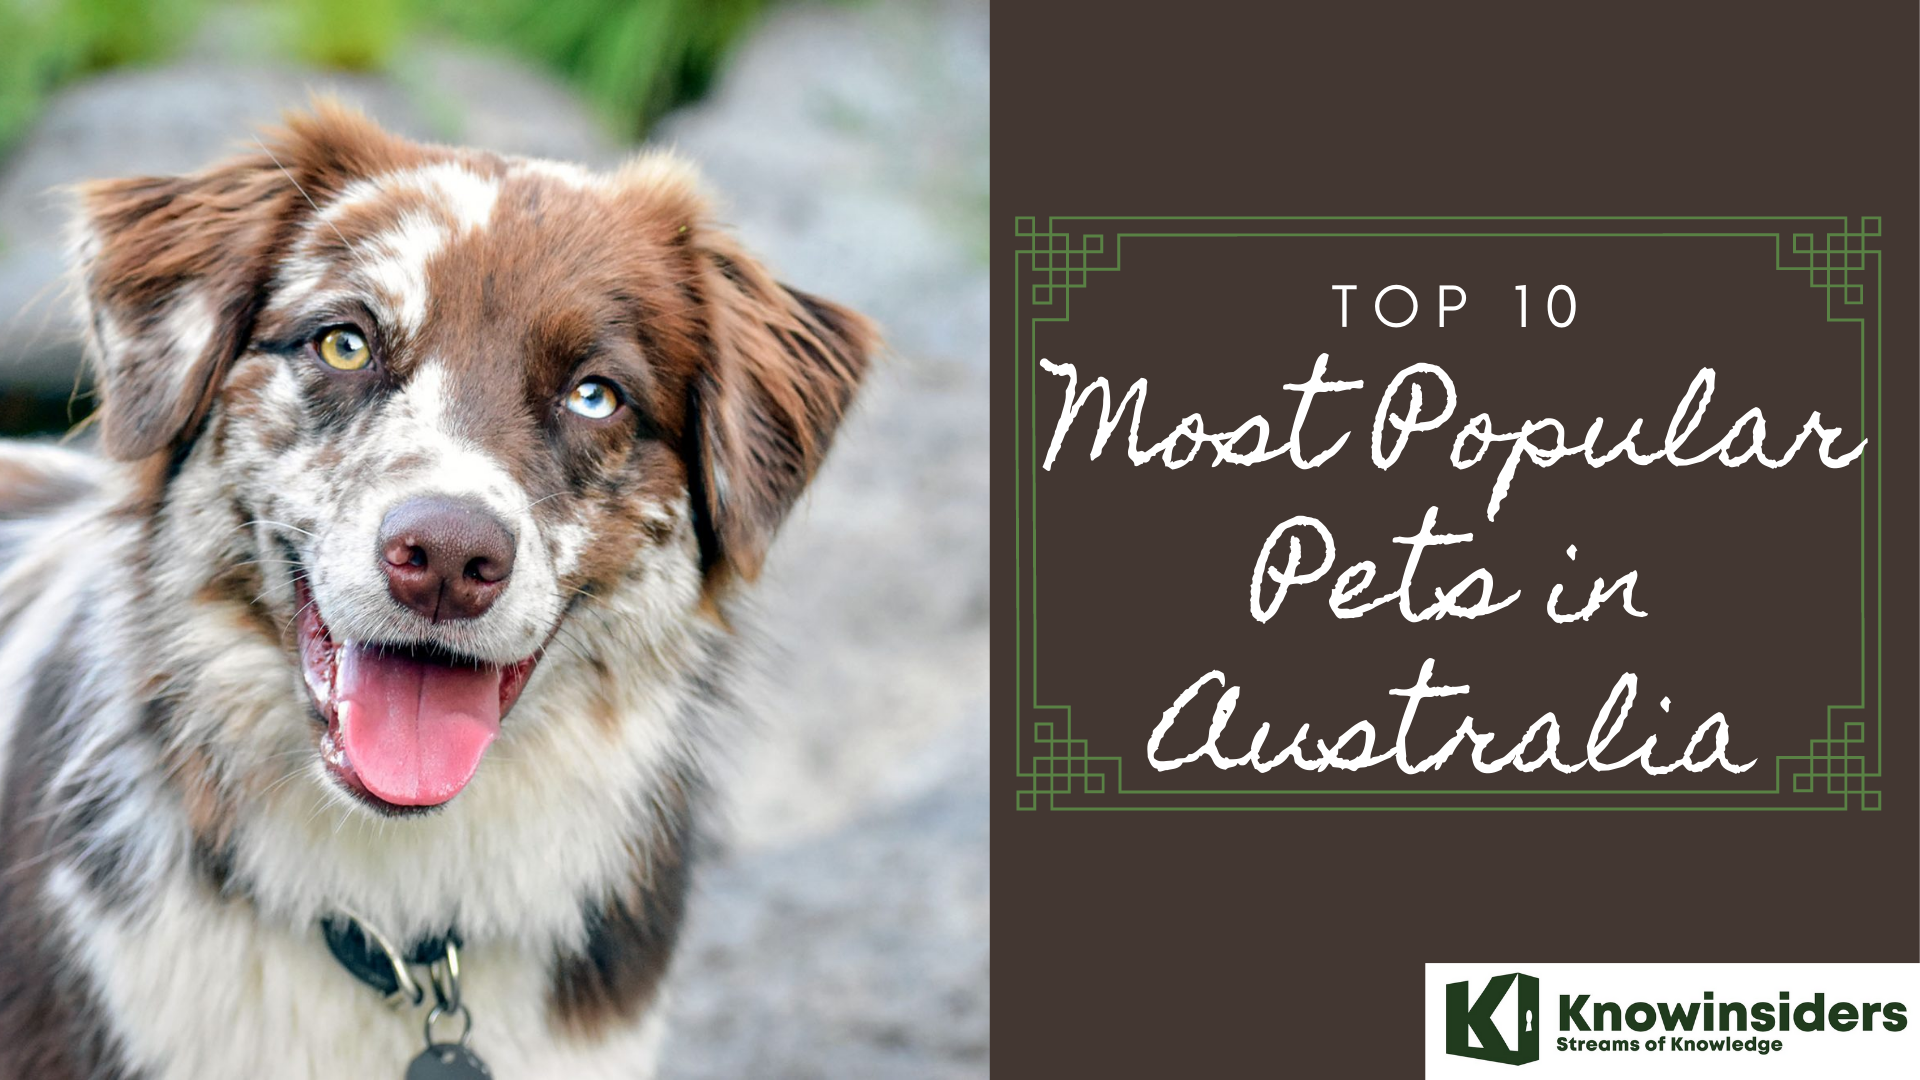 Top 10 Most Popular Pets in Australia